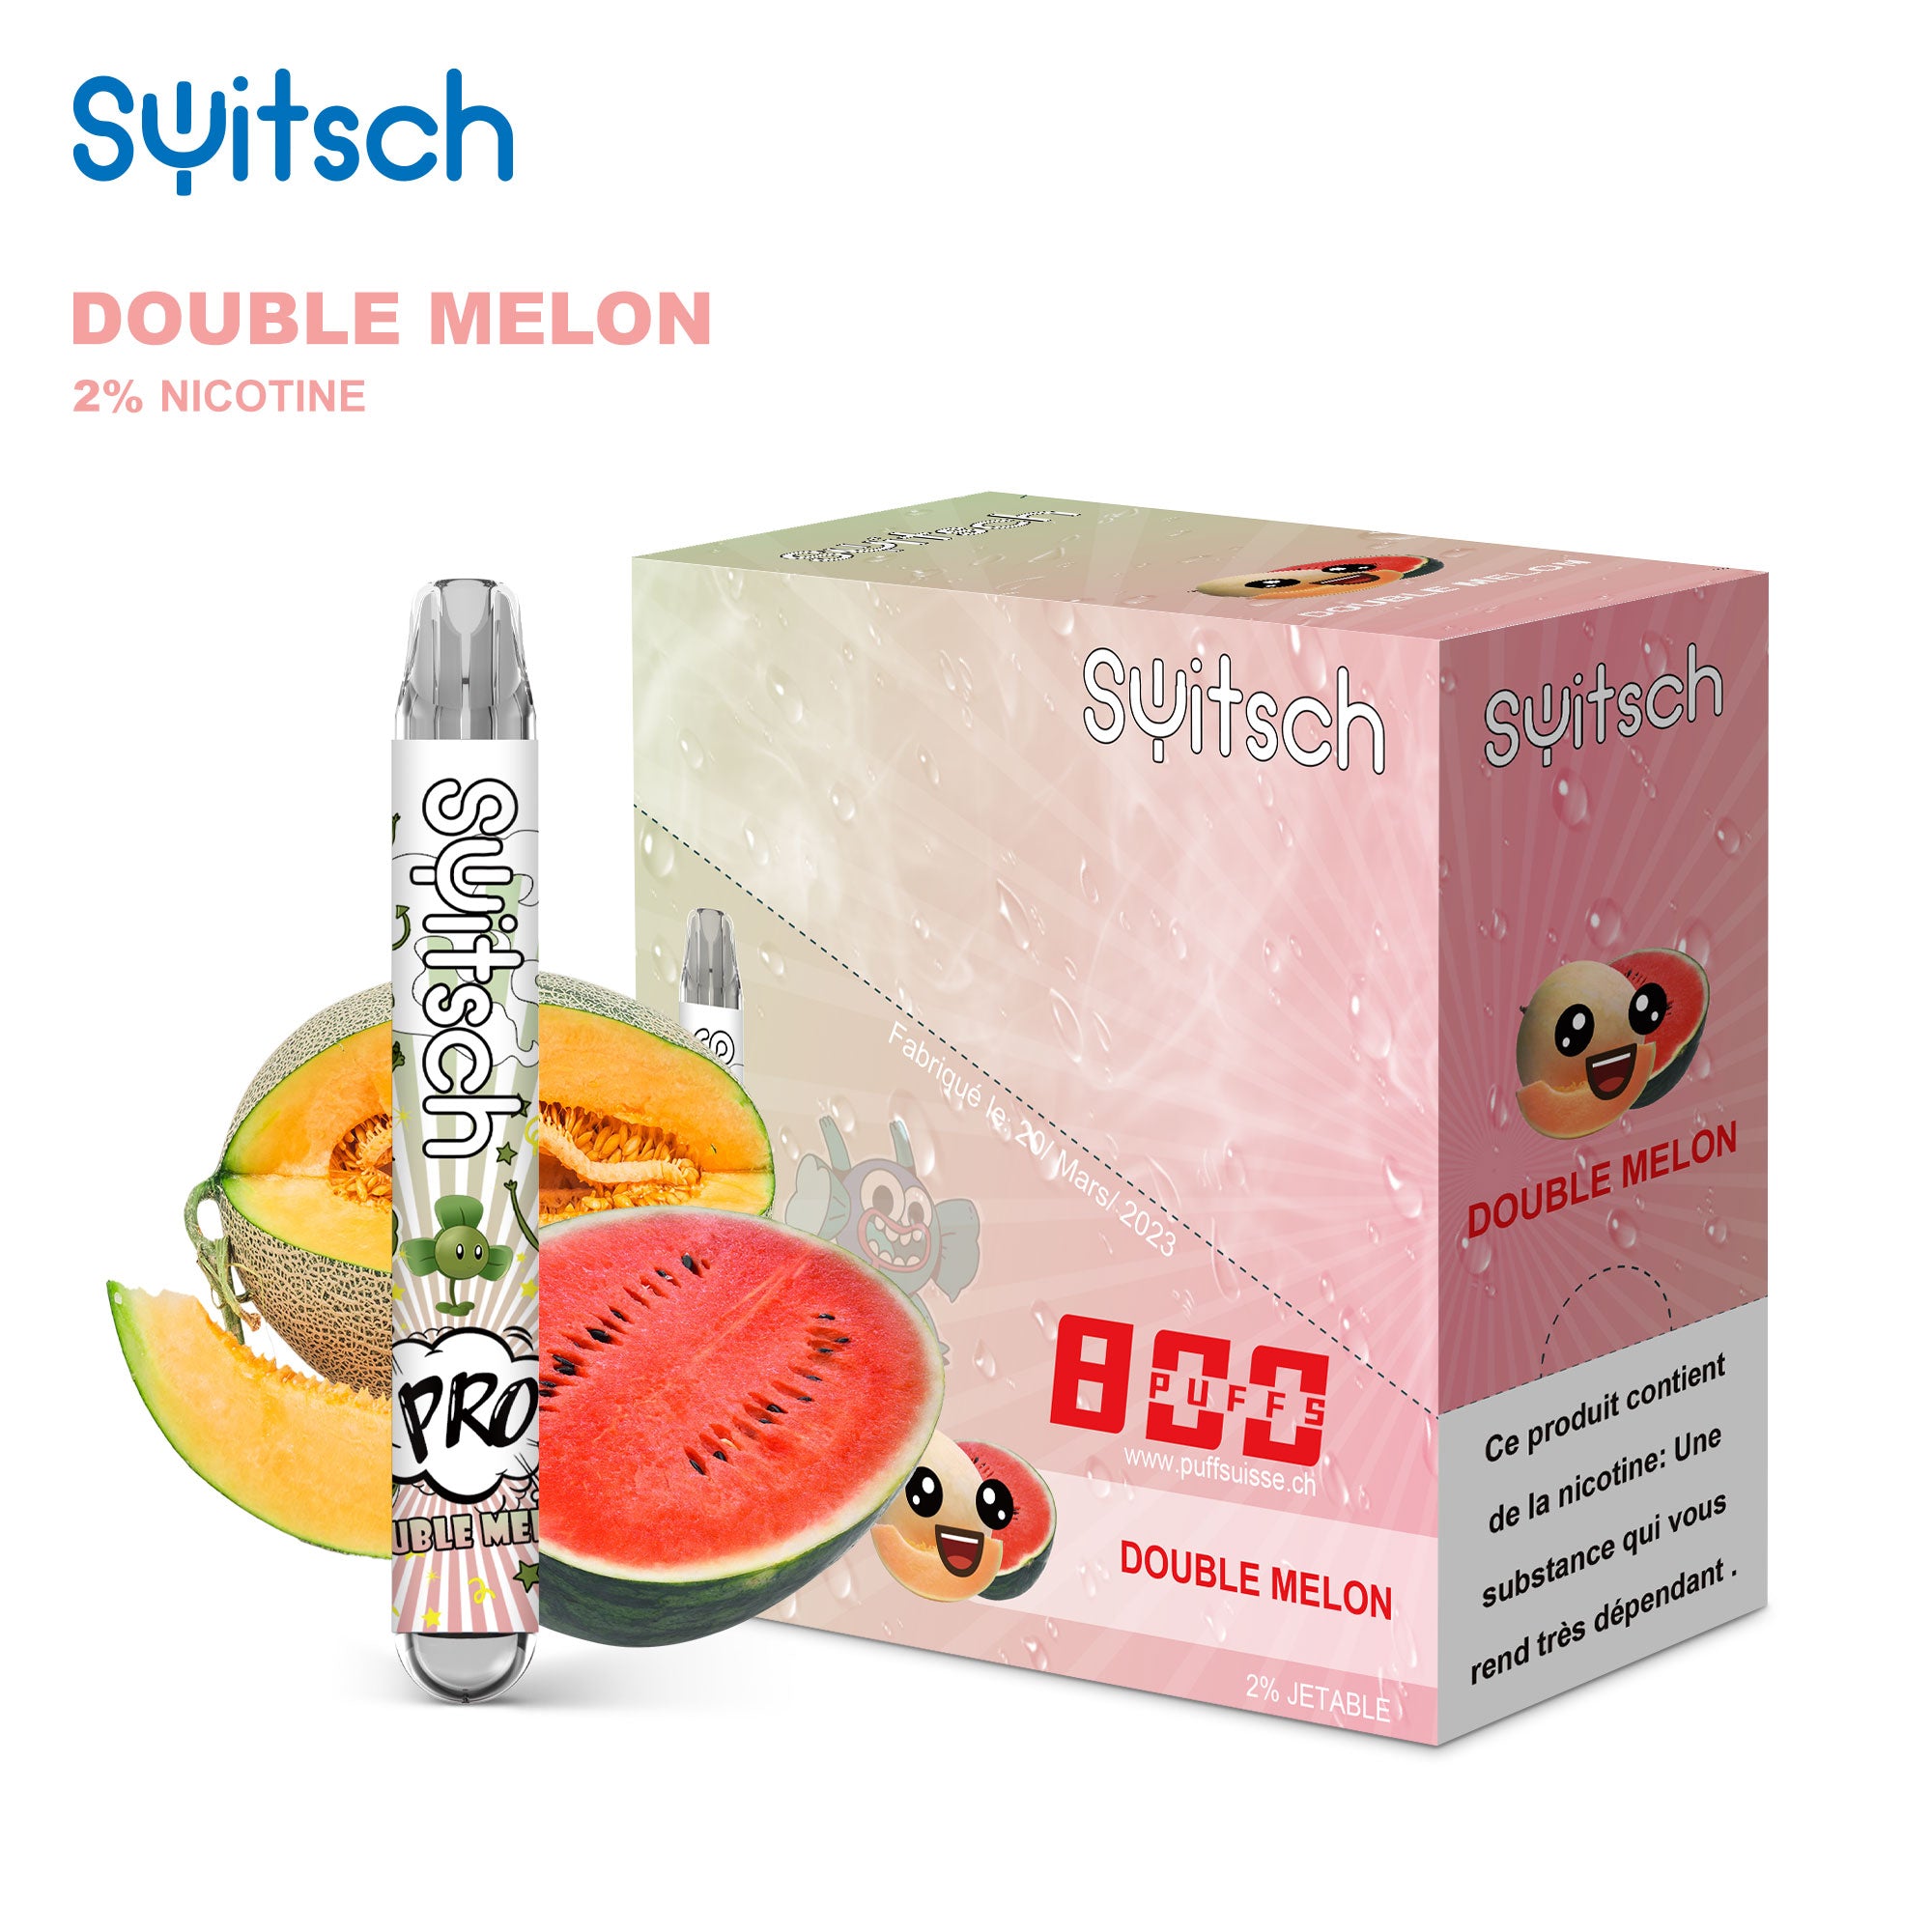 Double Melon - Puff Pro 2%